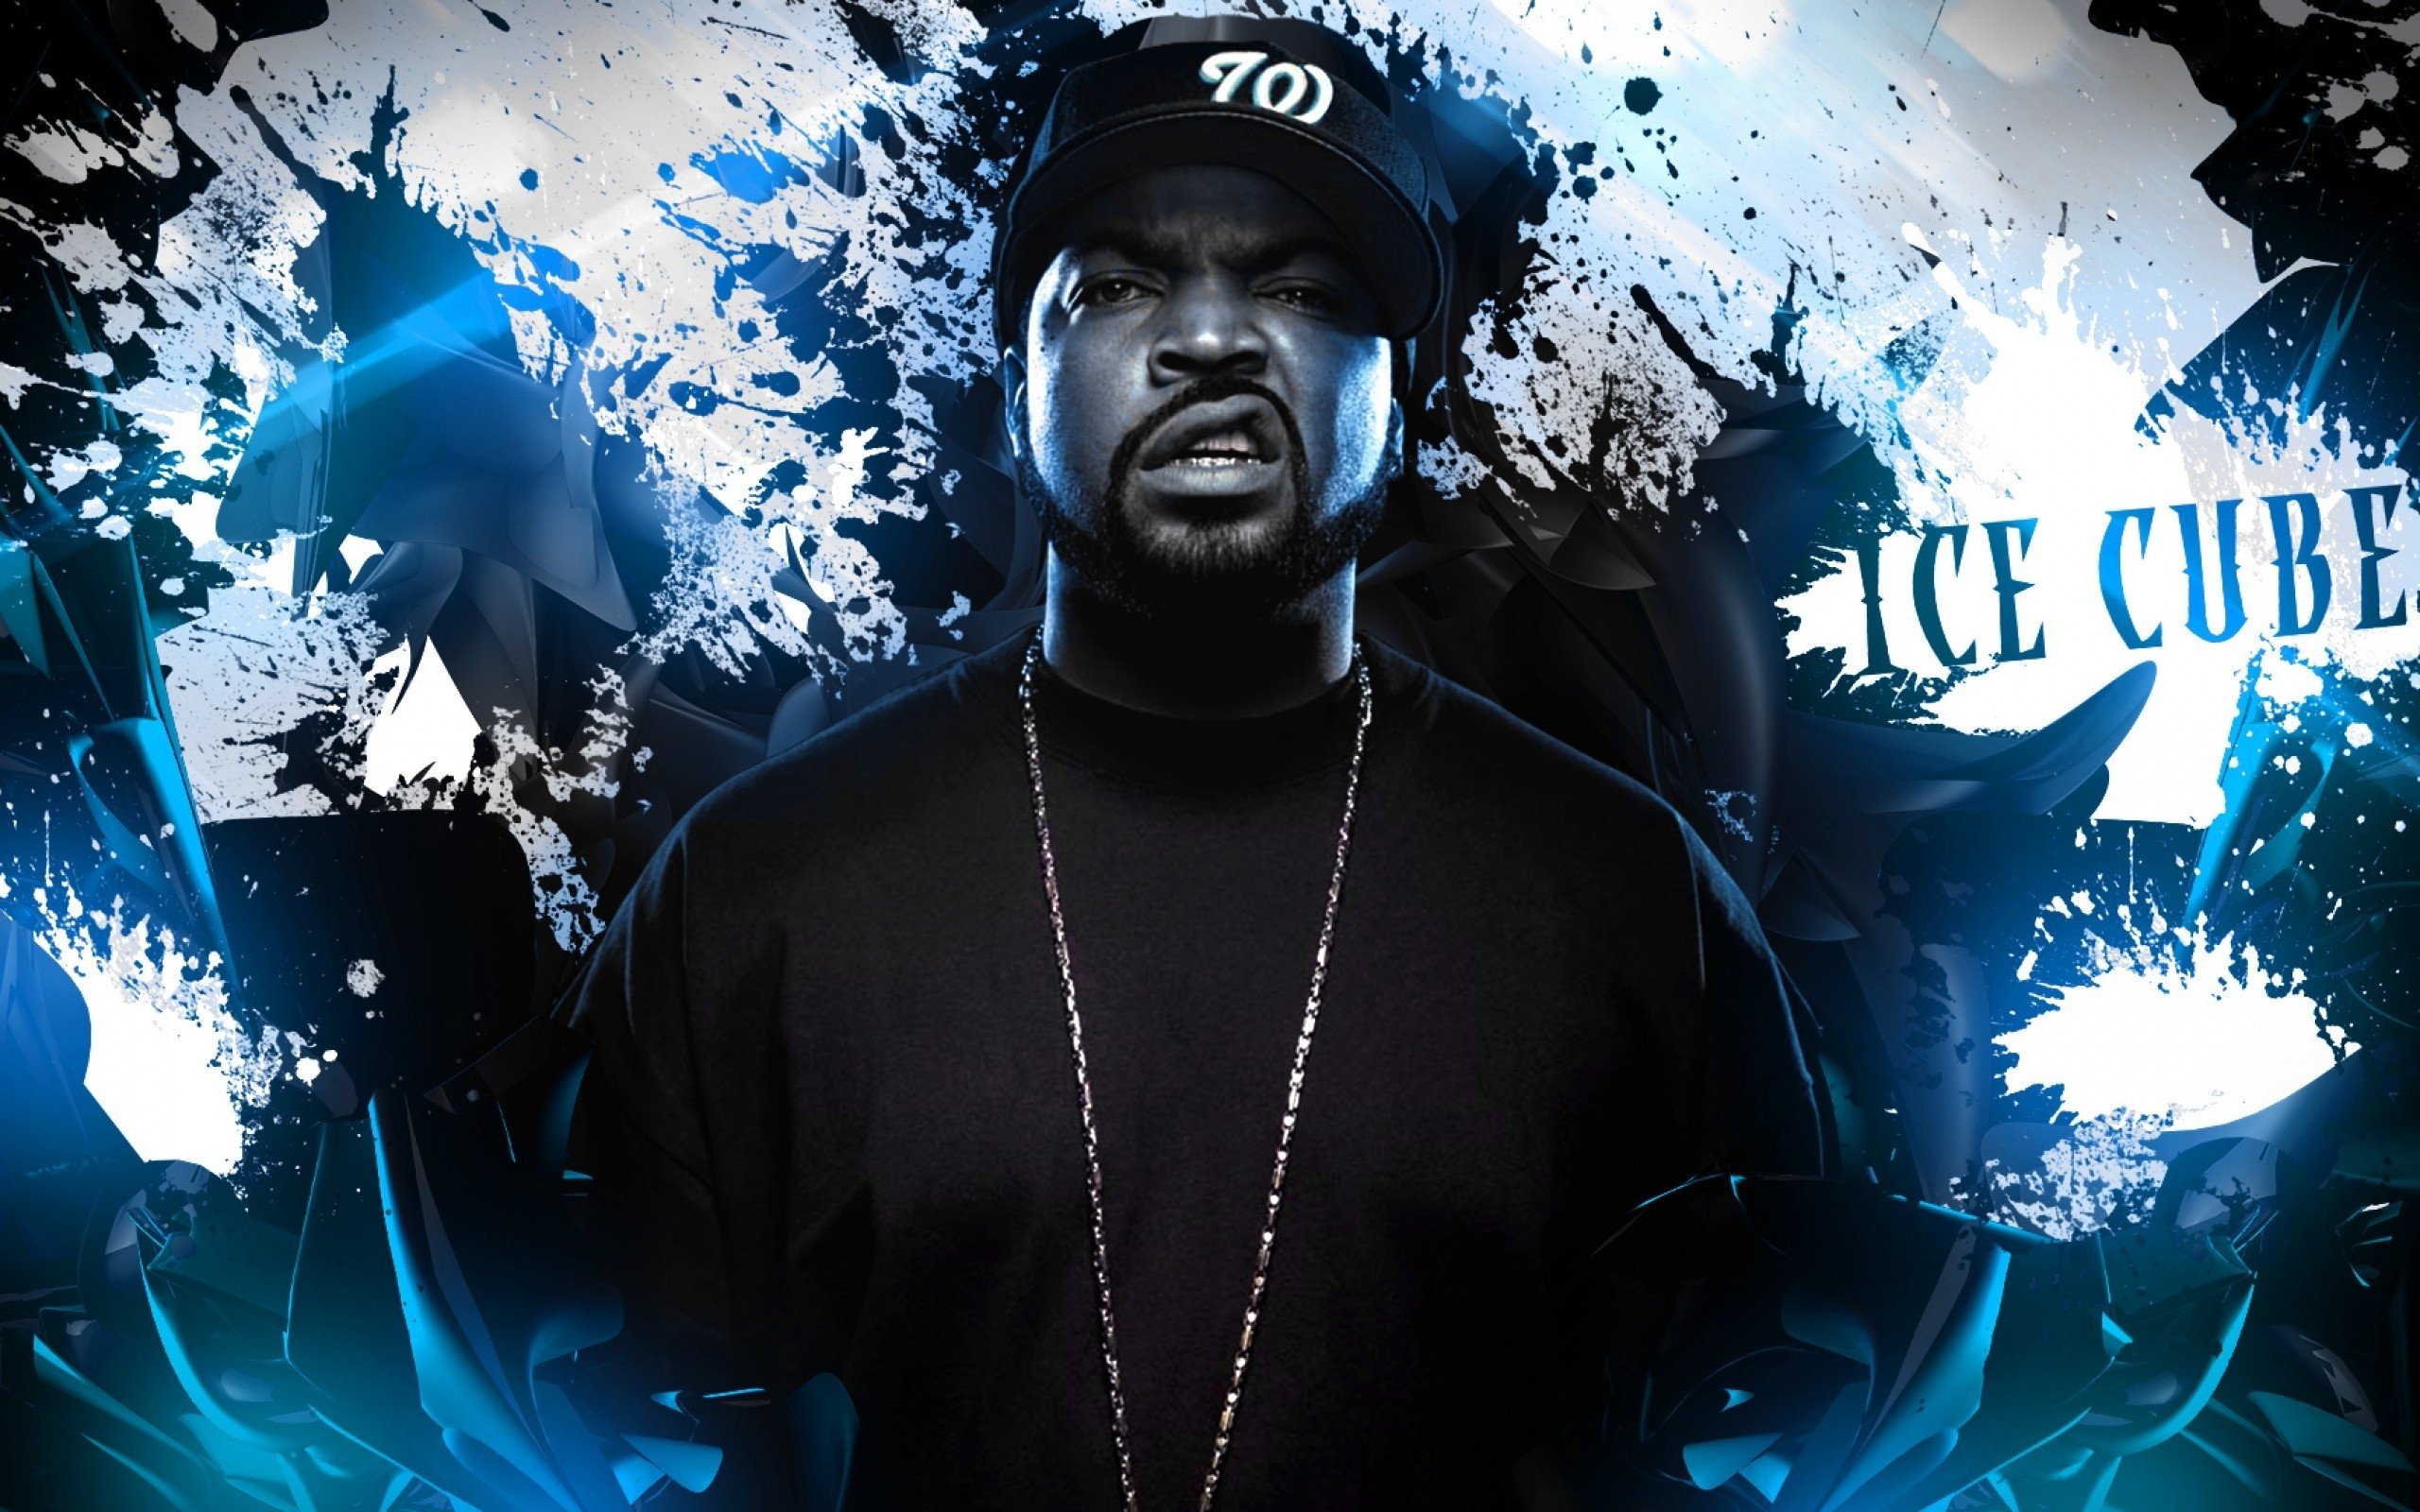 Ice cube feat. Ice Cube рэпер. Ice Cube 2pac. Айс Кьюб гангста рэп. Ice Cube гангста-РЭПЕРЫ.